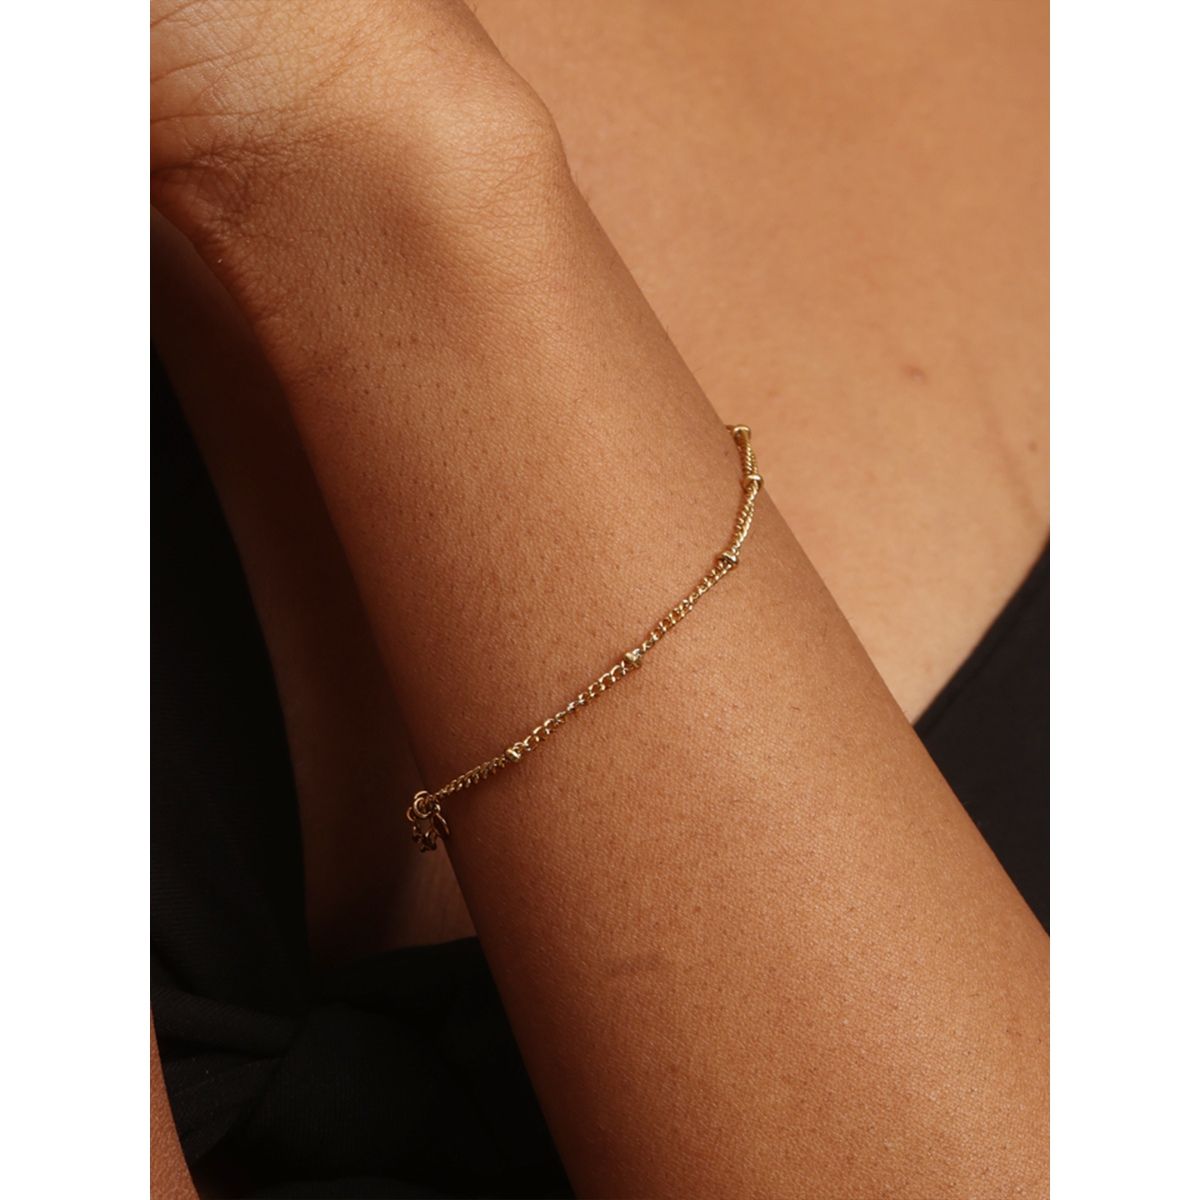 Buy Gold Bracelets  Bangles for Women by Palmonas Online  Ajiocom